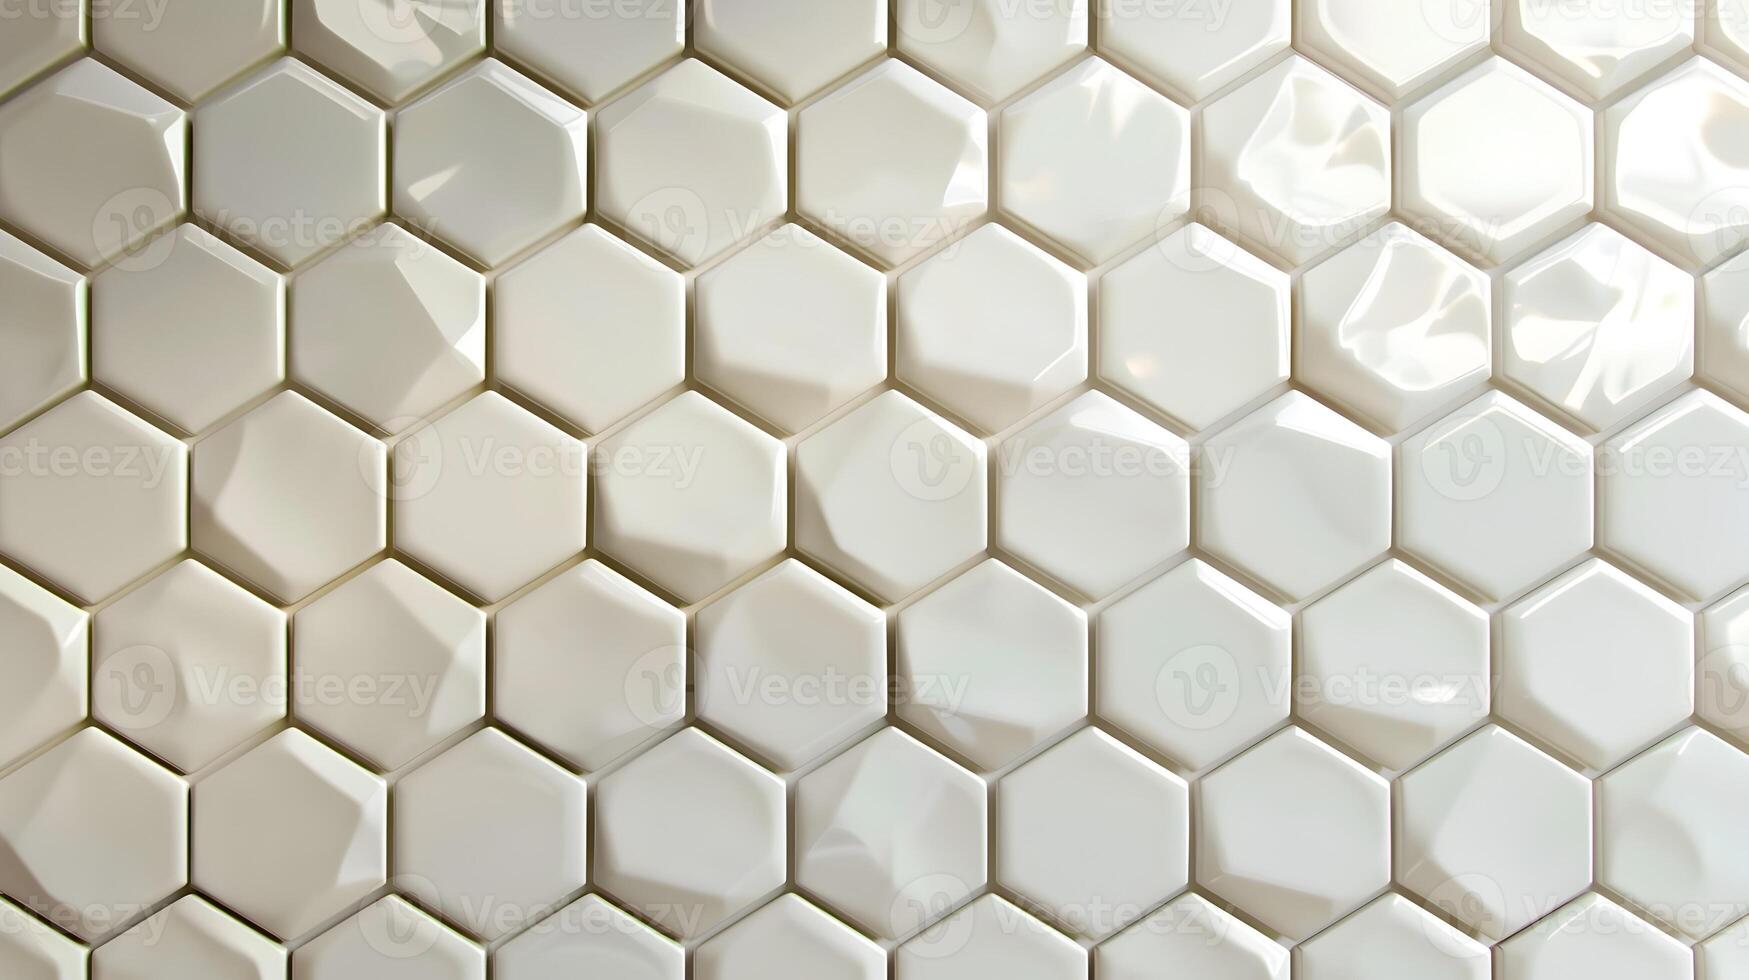 Elegant Hexagonal Tile Mosaic Pattern for Minimalist Architectural and Interior Designs photo